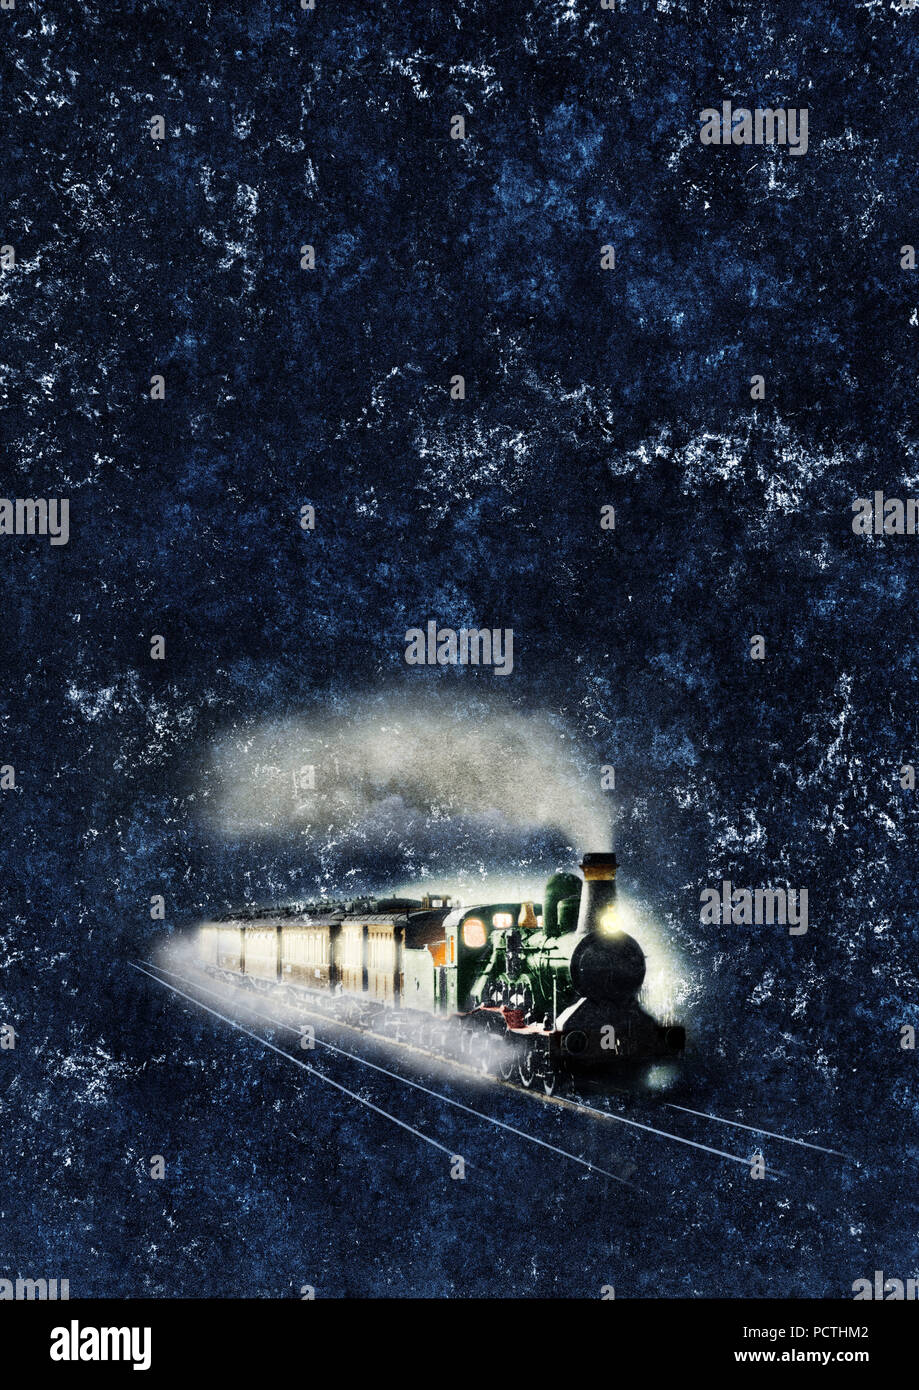 Locomotive, Train, Night, Retouched, Graphic, RailArt, [M] Stock Photo